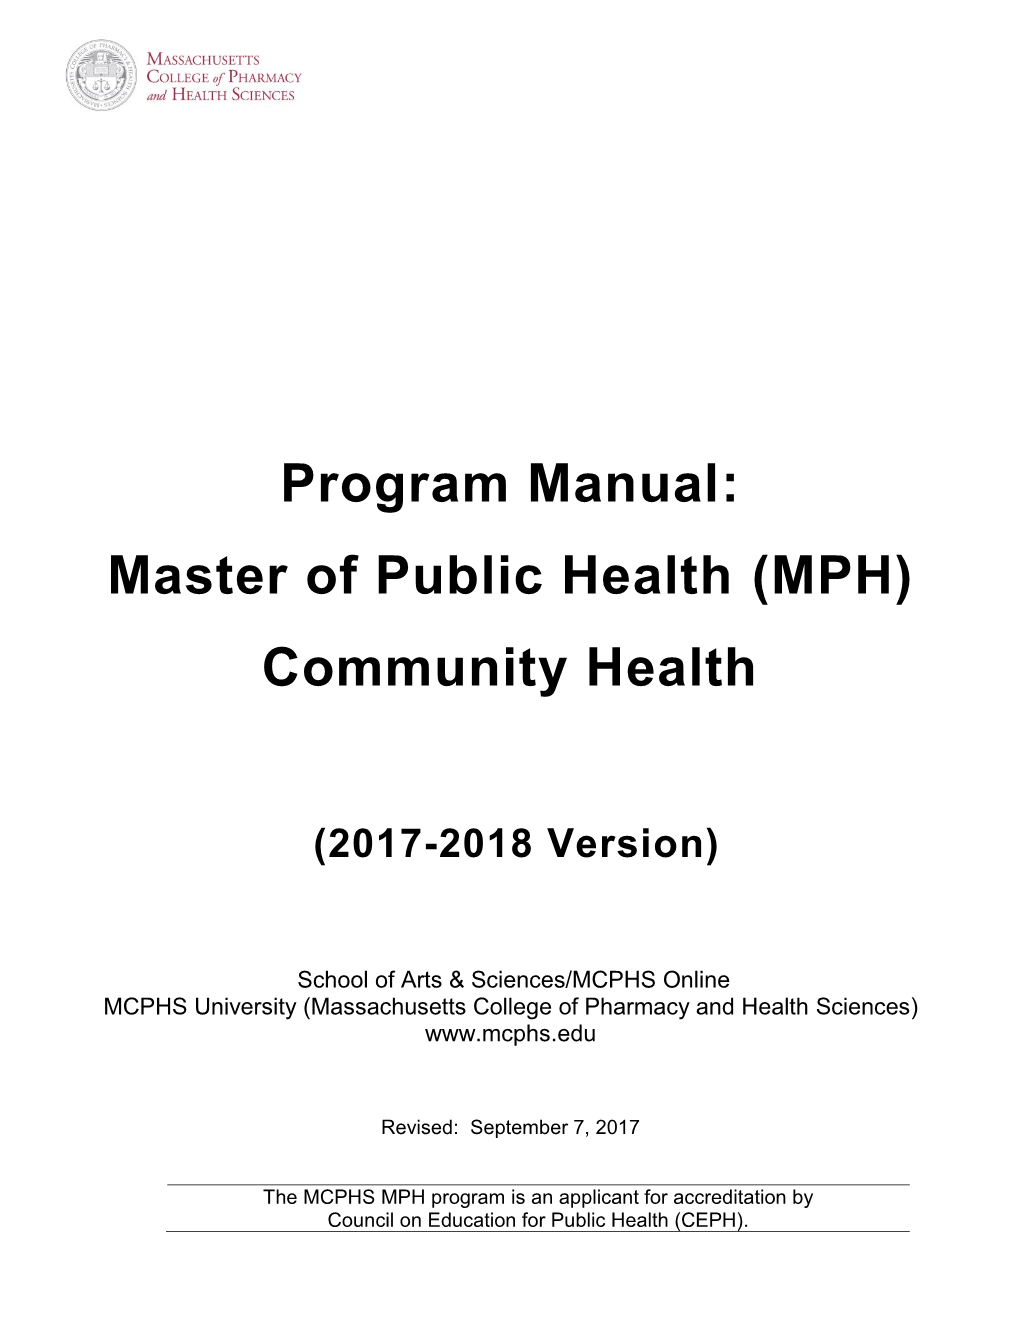 Program Manual: Master of Public Health (MPH) Community Health